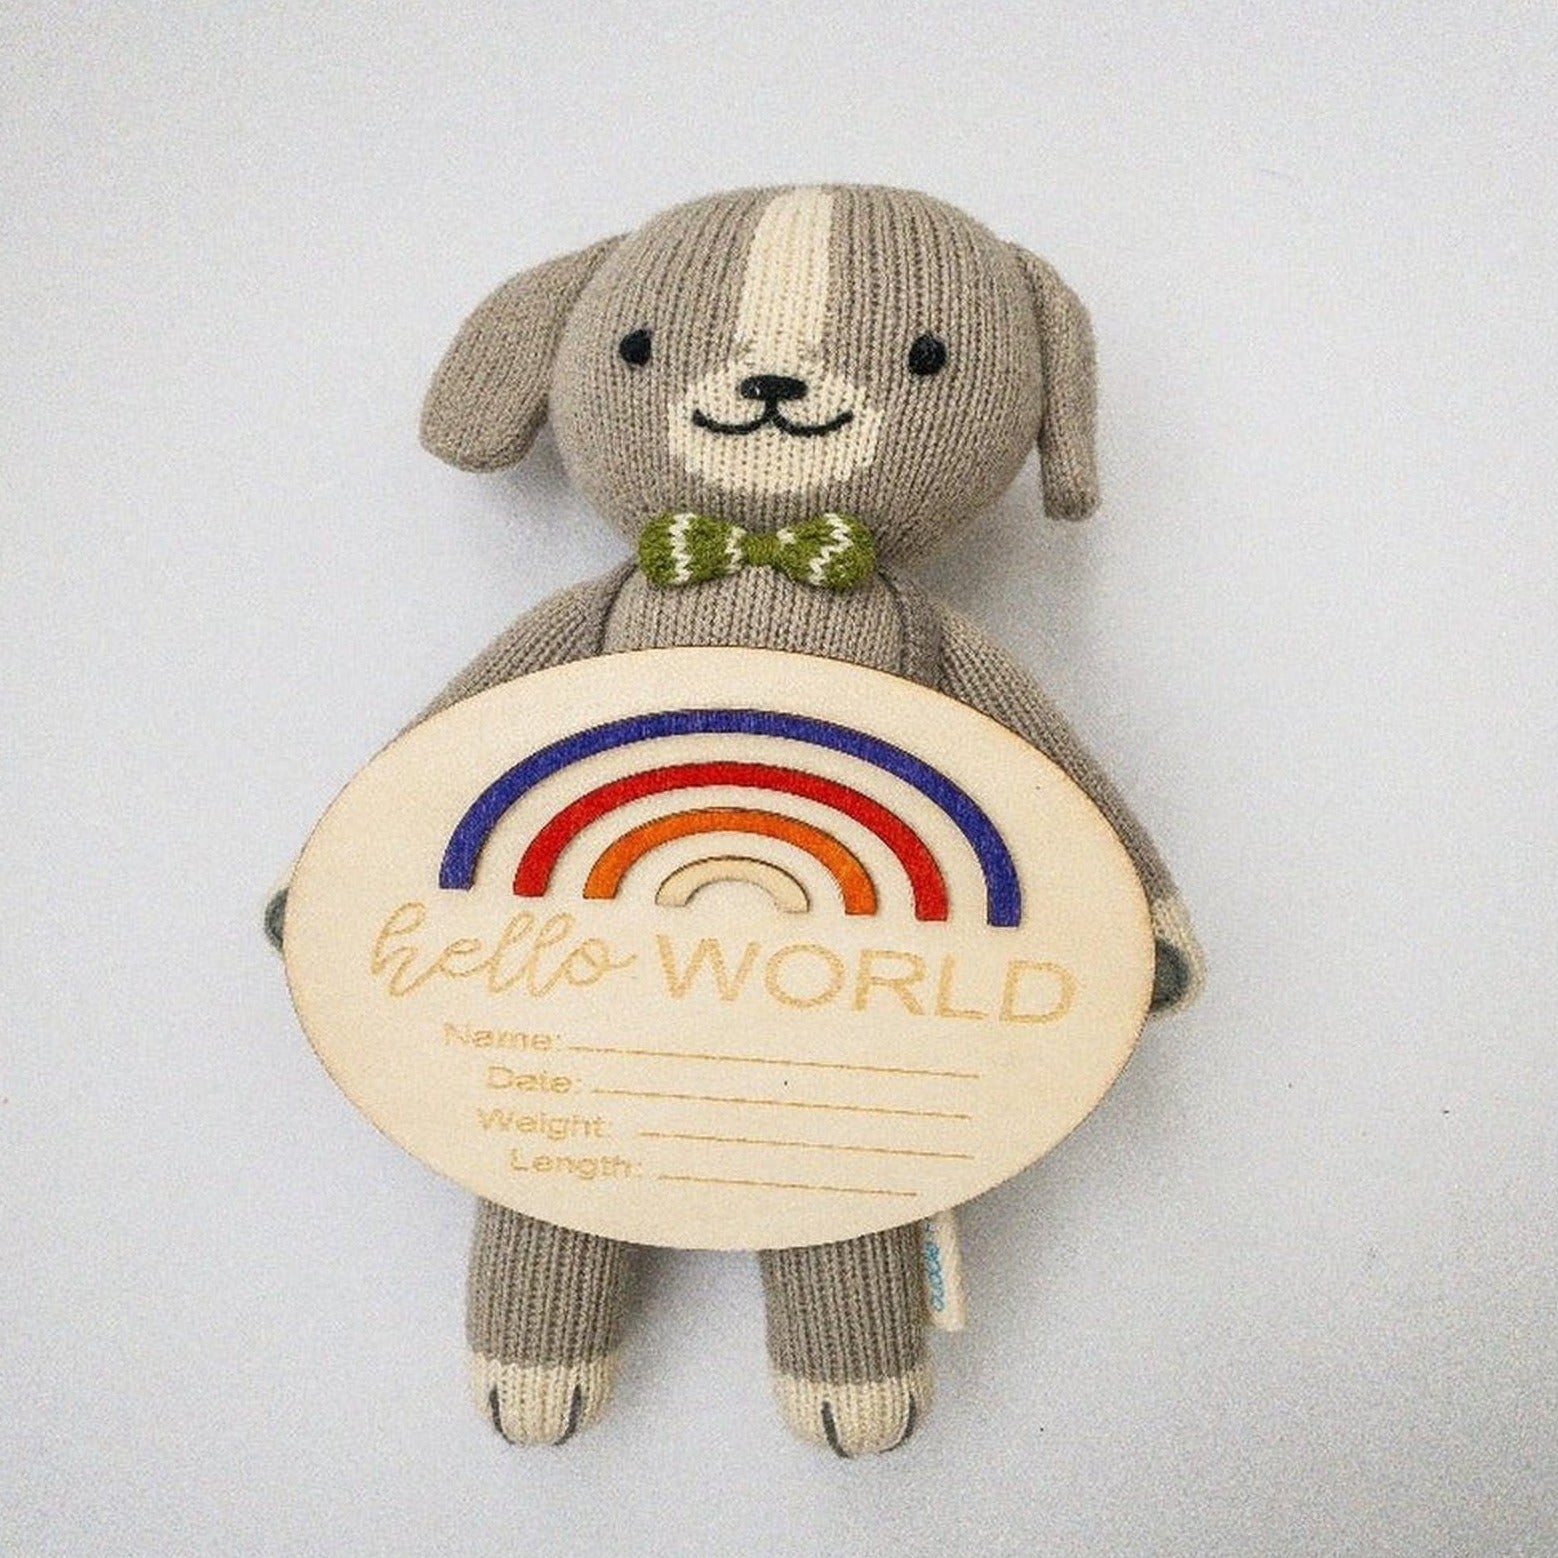 Rainbow Hello World-Birth Announcement Wood Disc